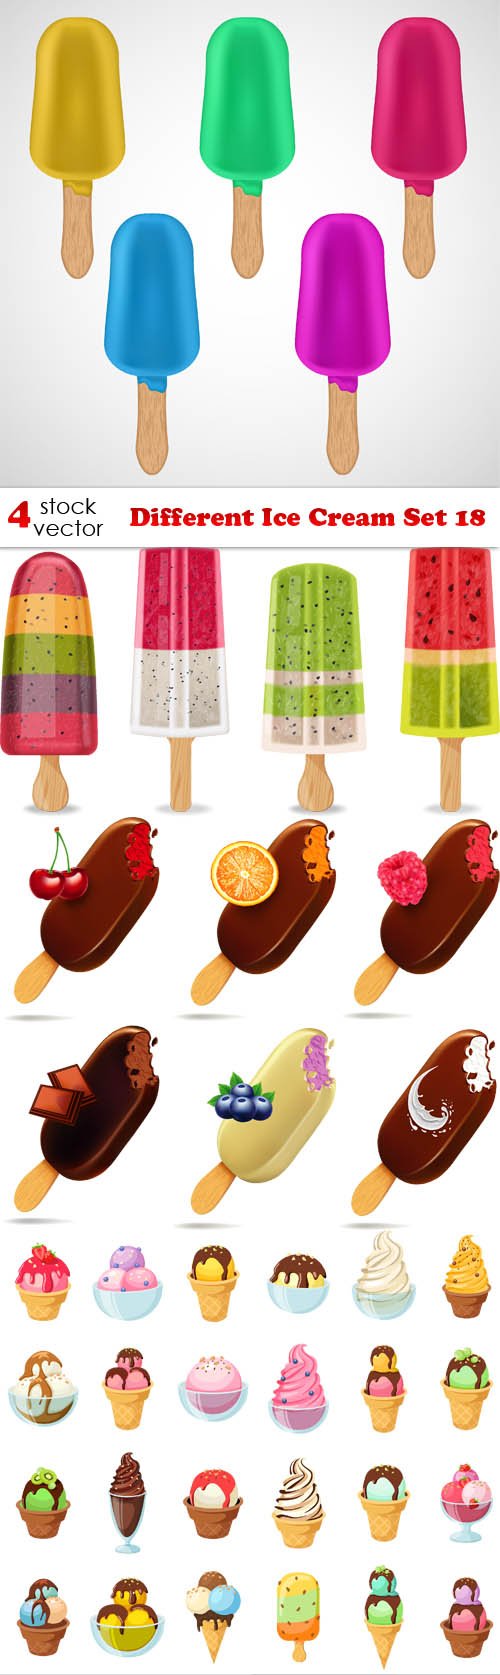 Vectors - Different Ice Cream Set 18